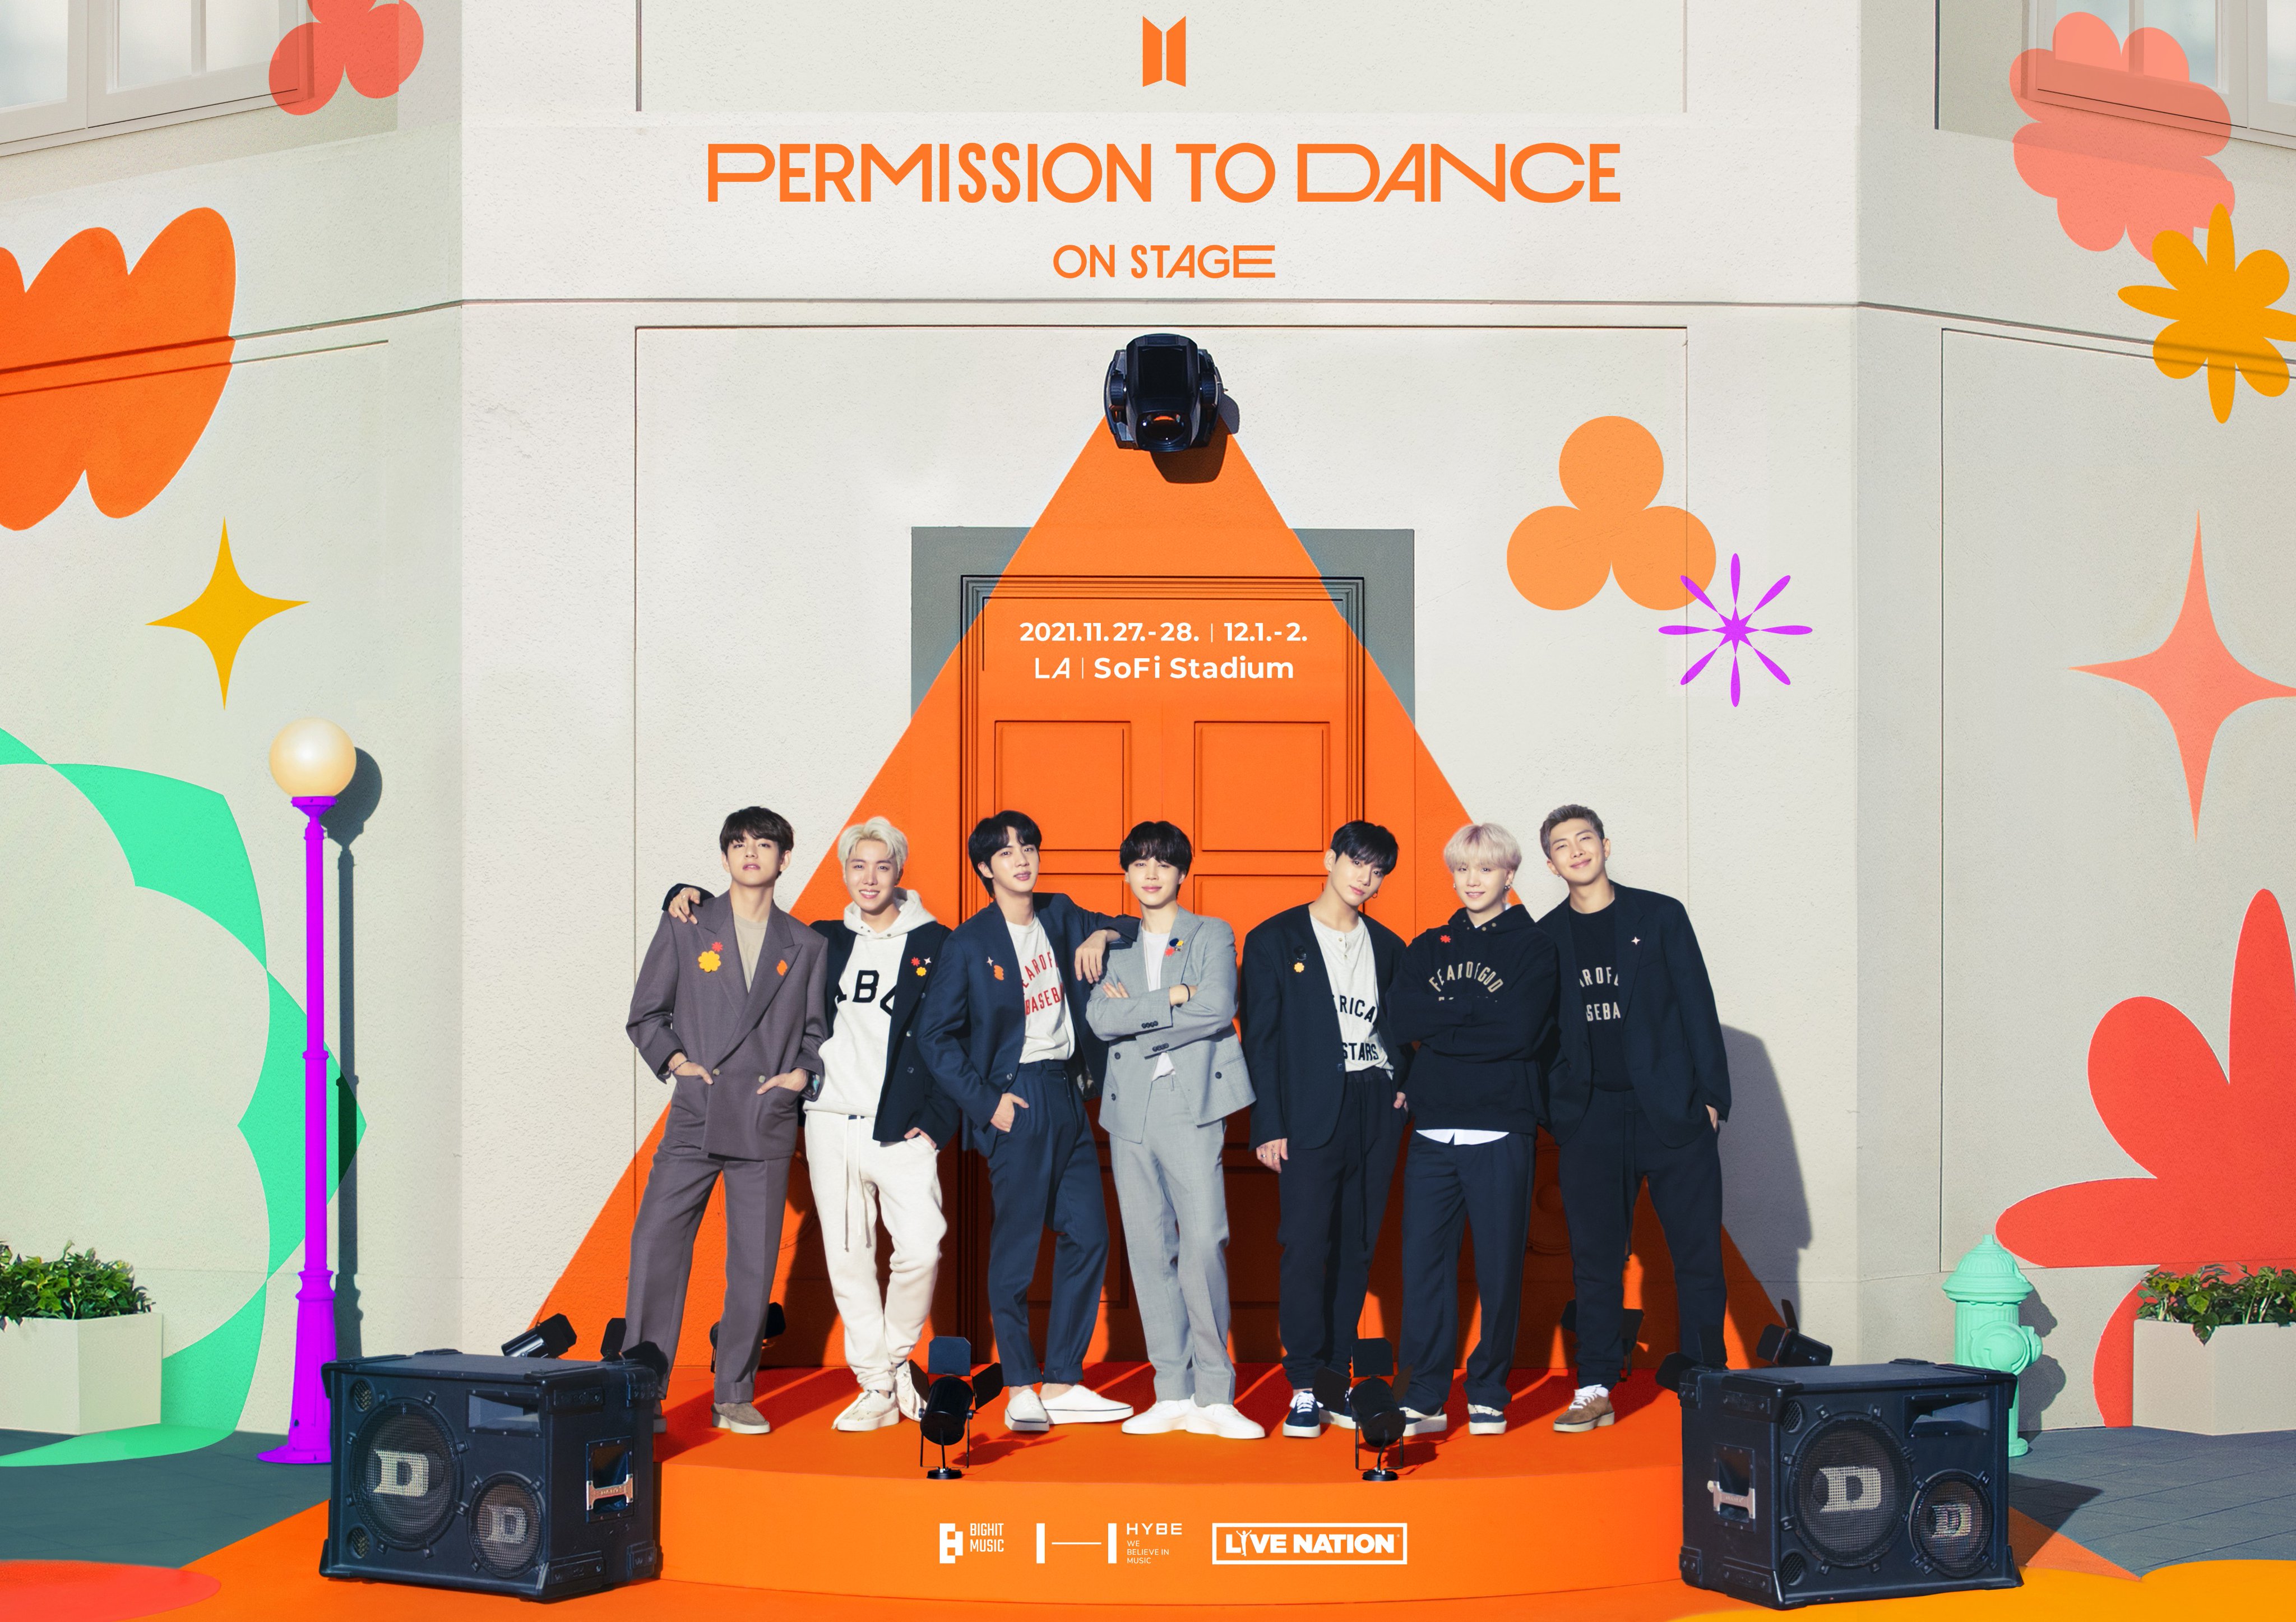 V, J-Hope, Jin, Jimin, Jungkook, Suga, and RM pose on a small orange stage